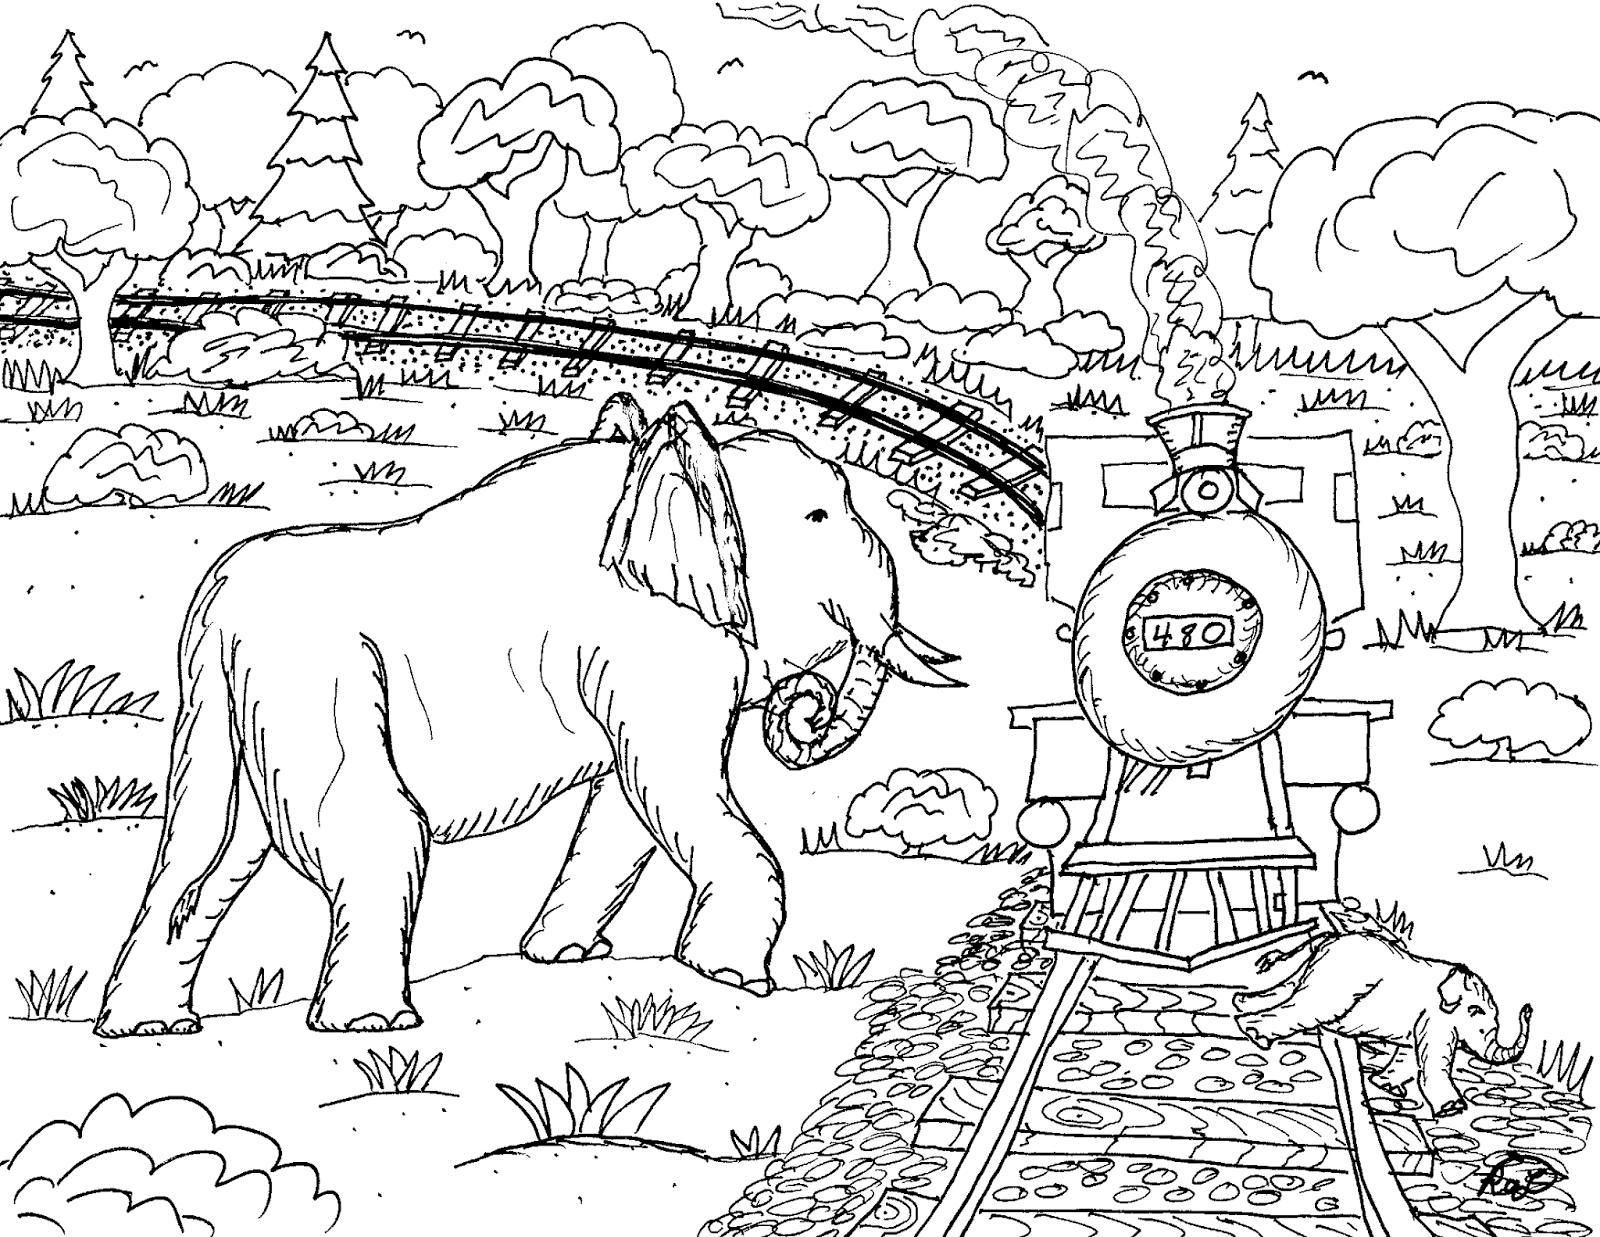 Jumbo the circus elephant takes on the Train